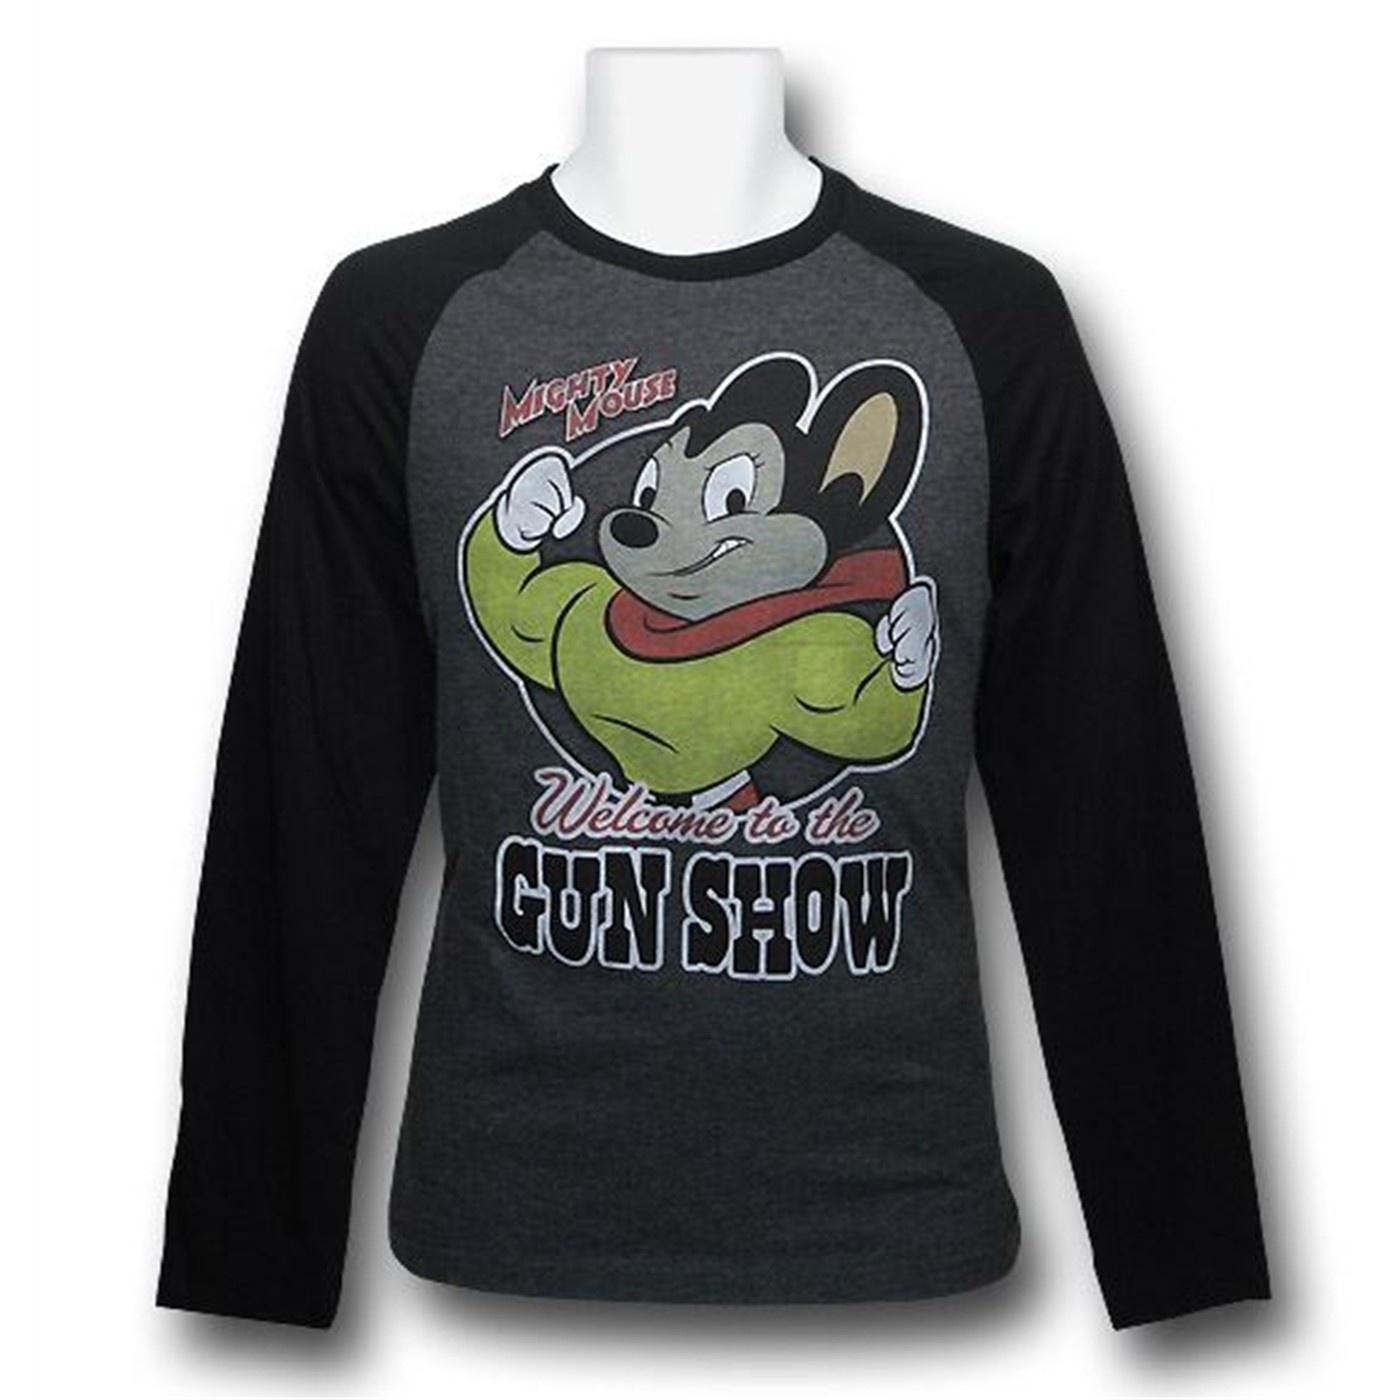 Mighty Mouse Gun Show Long Sleeve T-Shirt